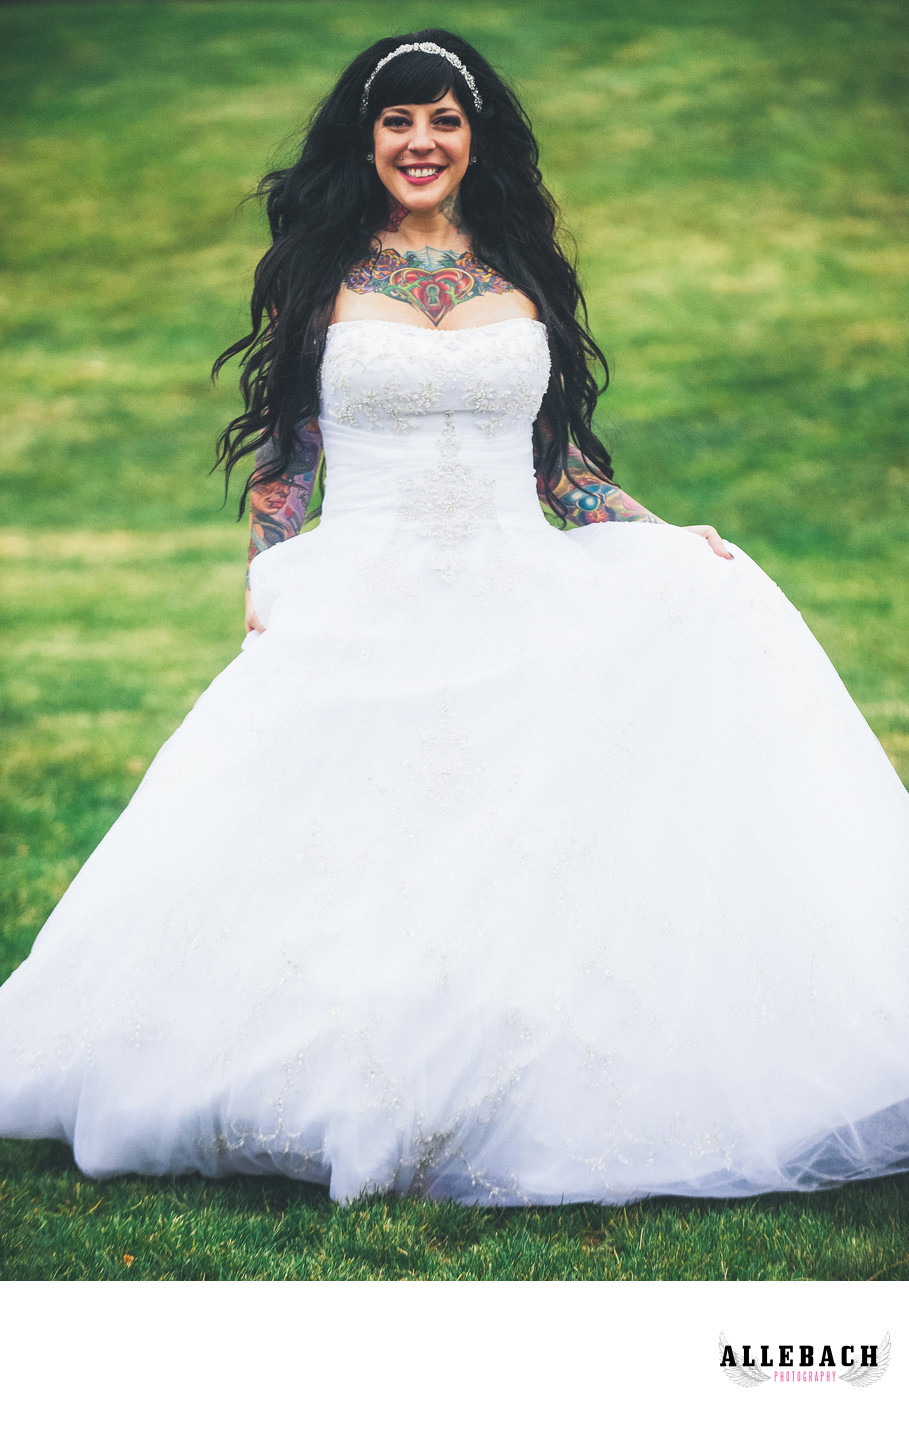 Tattooed Bride Photographer Mike Allebach